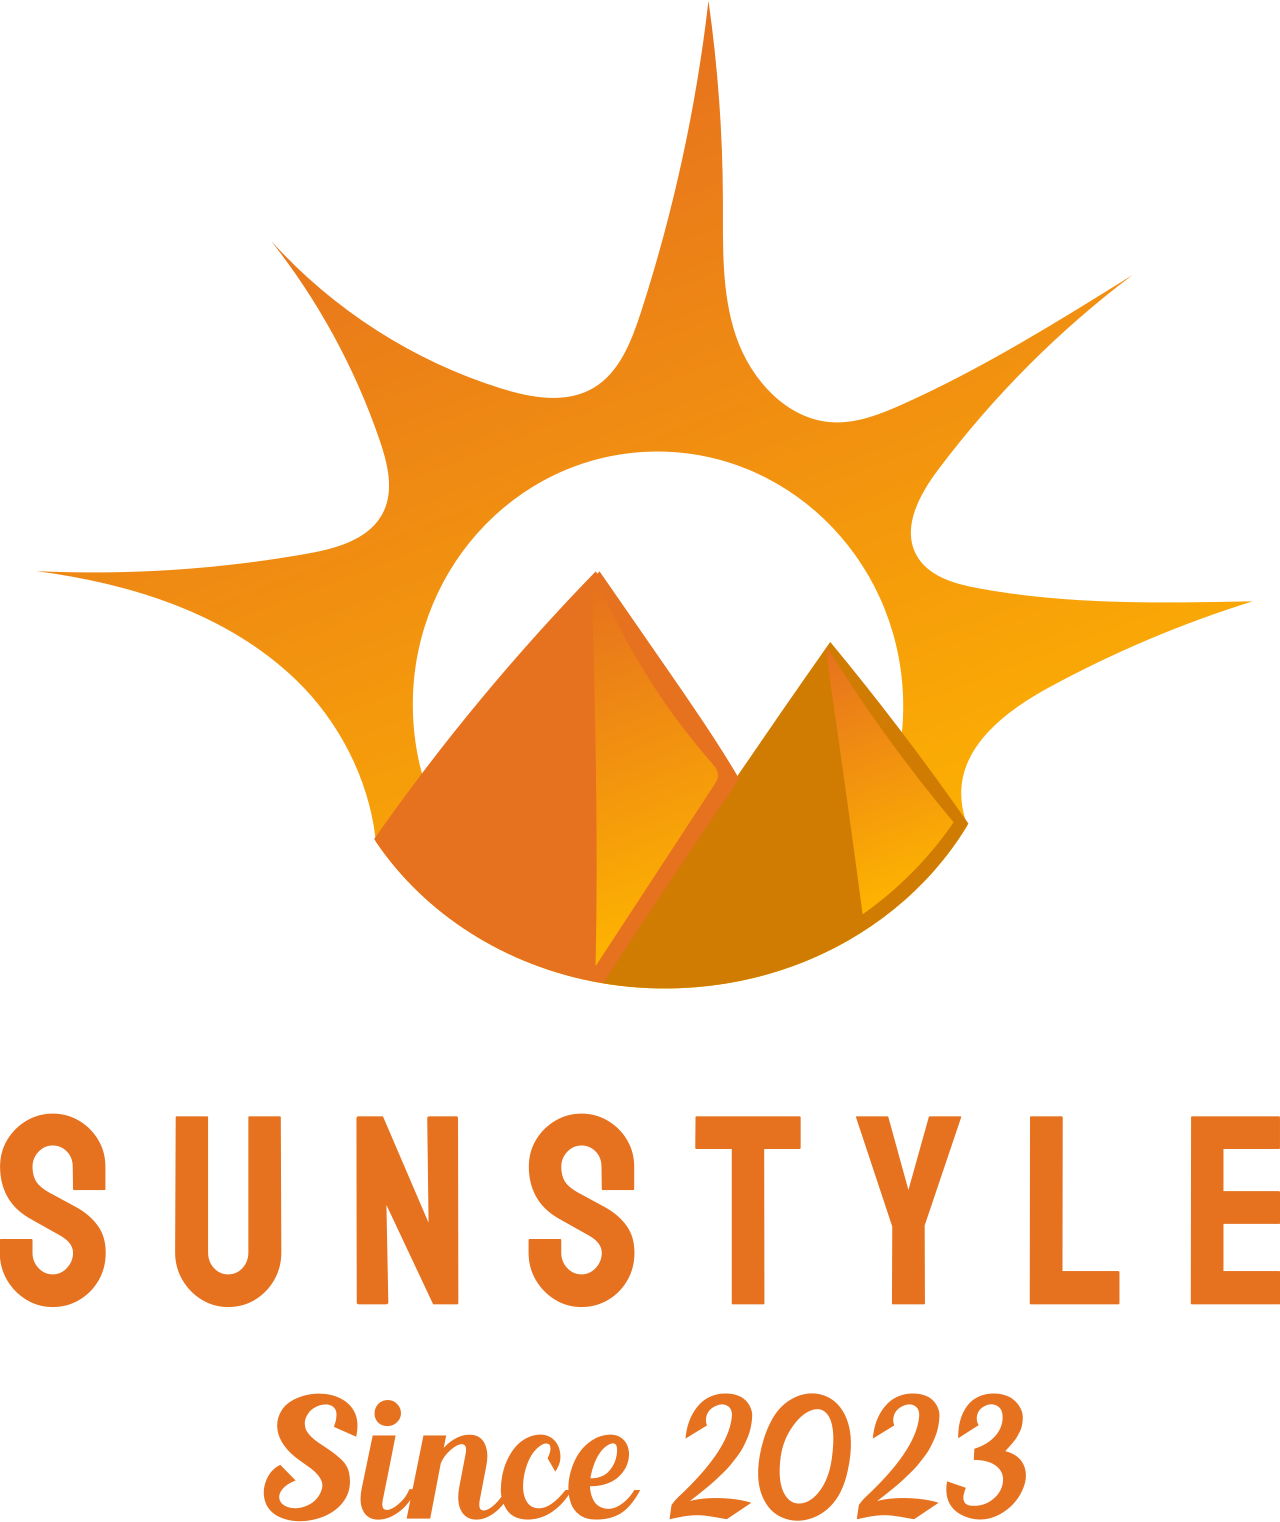 SunStyle's logo